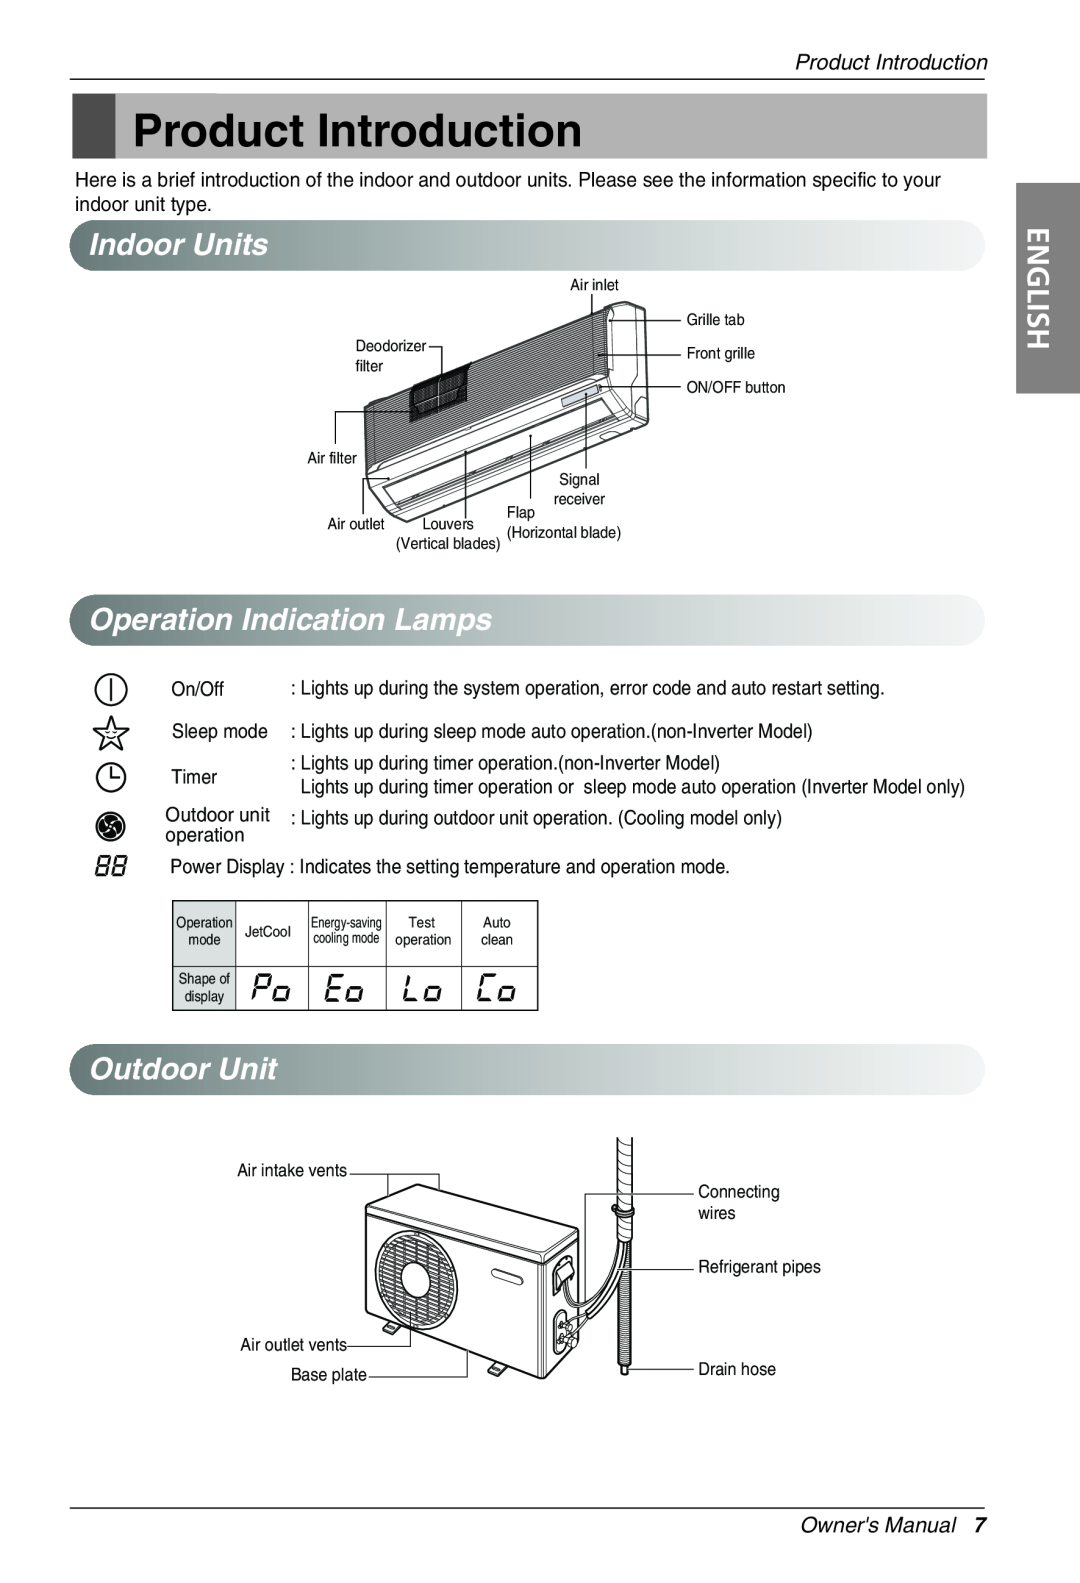 Heat Controller VMC09SB-1, VMC18SB-1 Product Introduction, IndoorUnits, OperationIndicationLamps, OutdoorUnit, English 